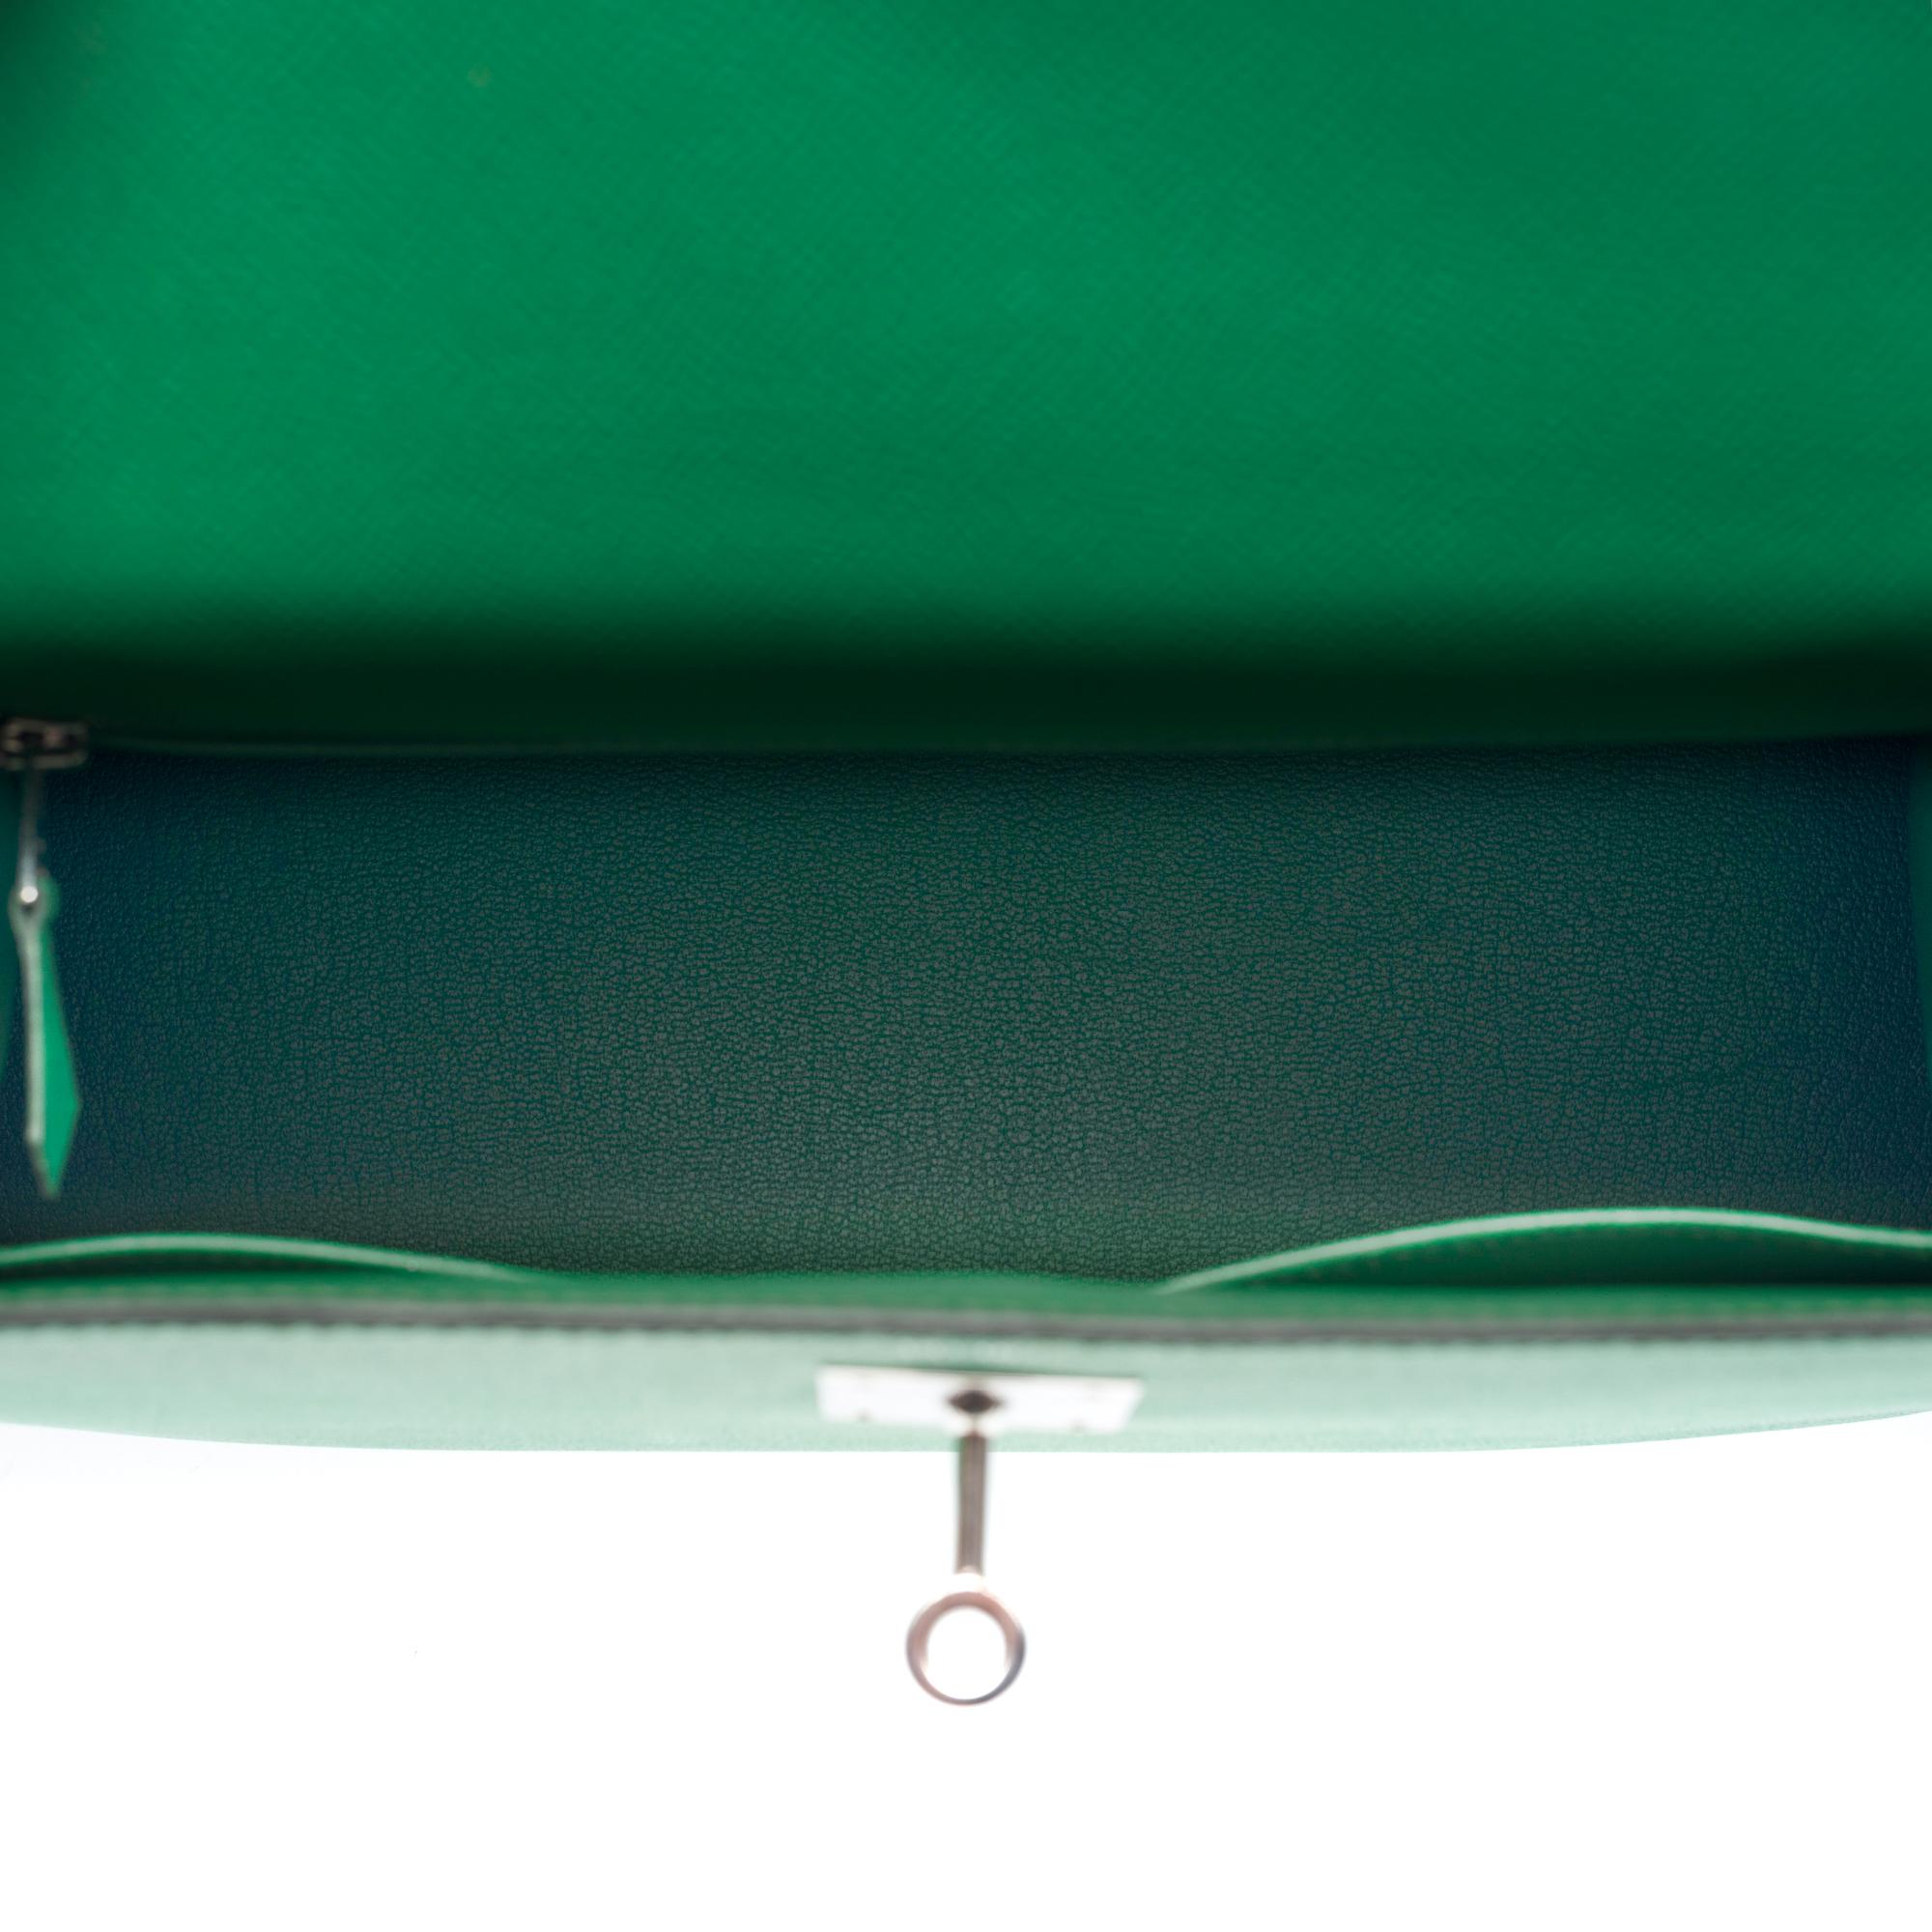 Bright Hermès Kelly 28 sellier handbag strap in Green Cactus Epsom leather, SHW 3